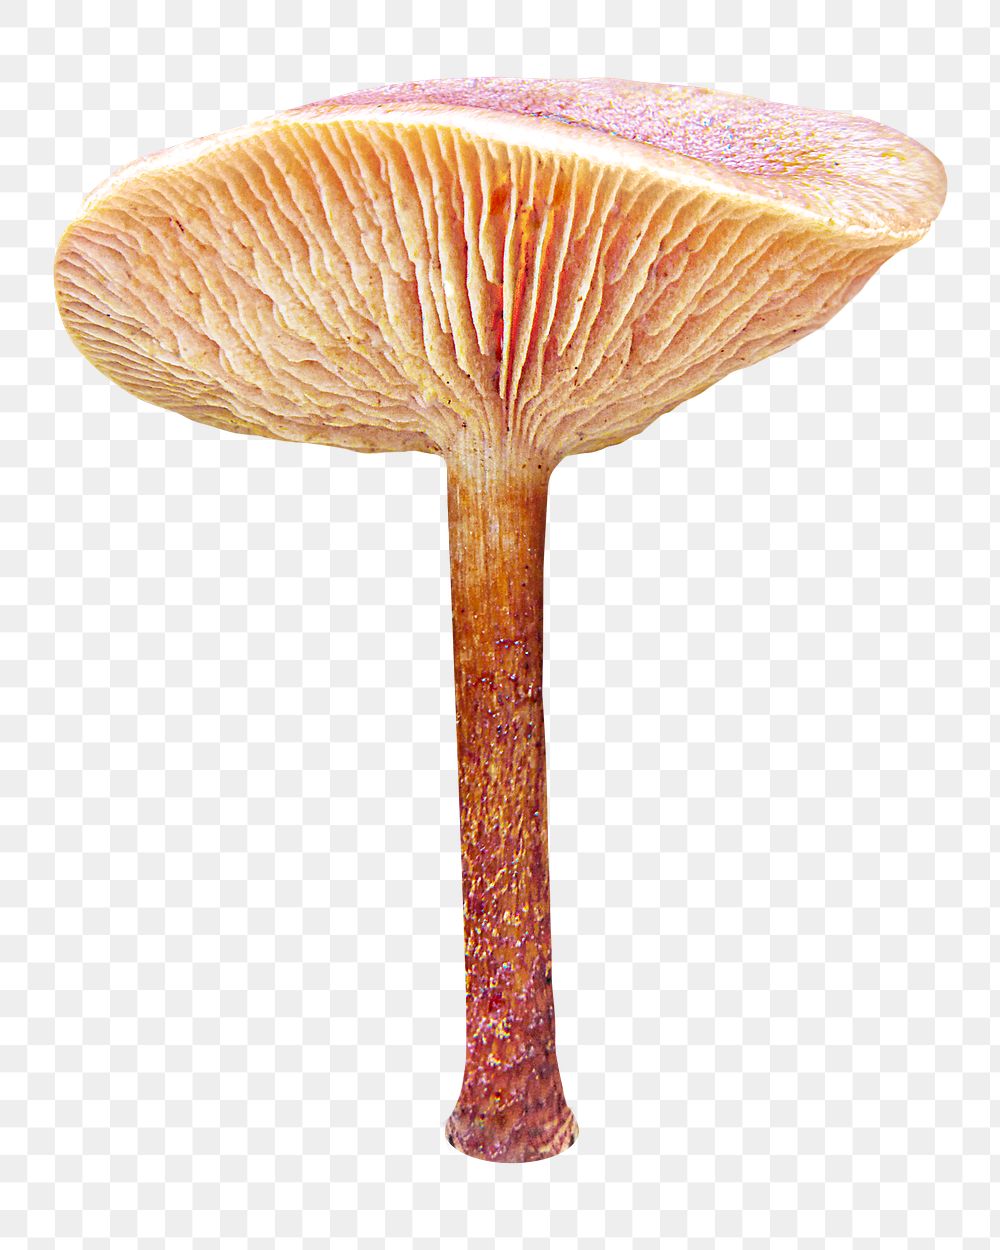 PNG Pholiota fungus, collage element, transparent background